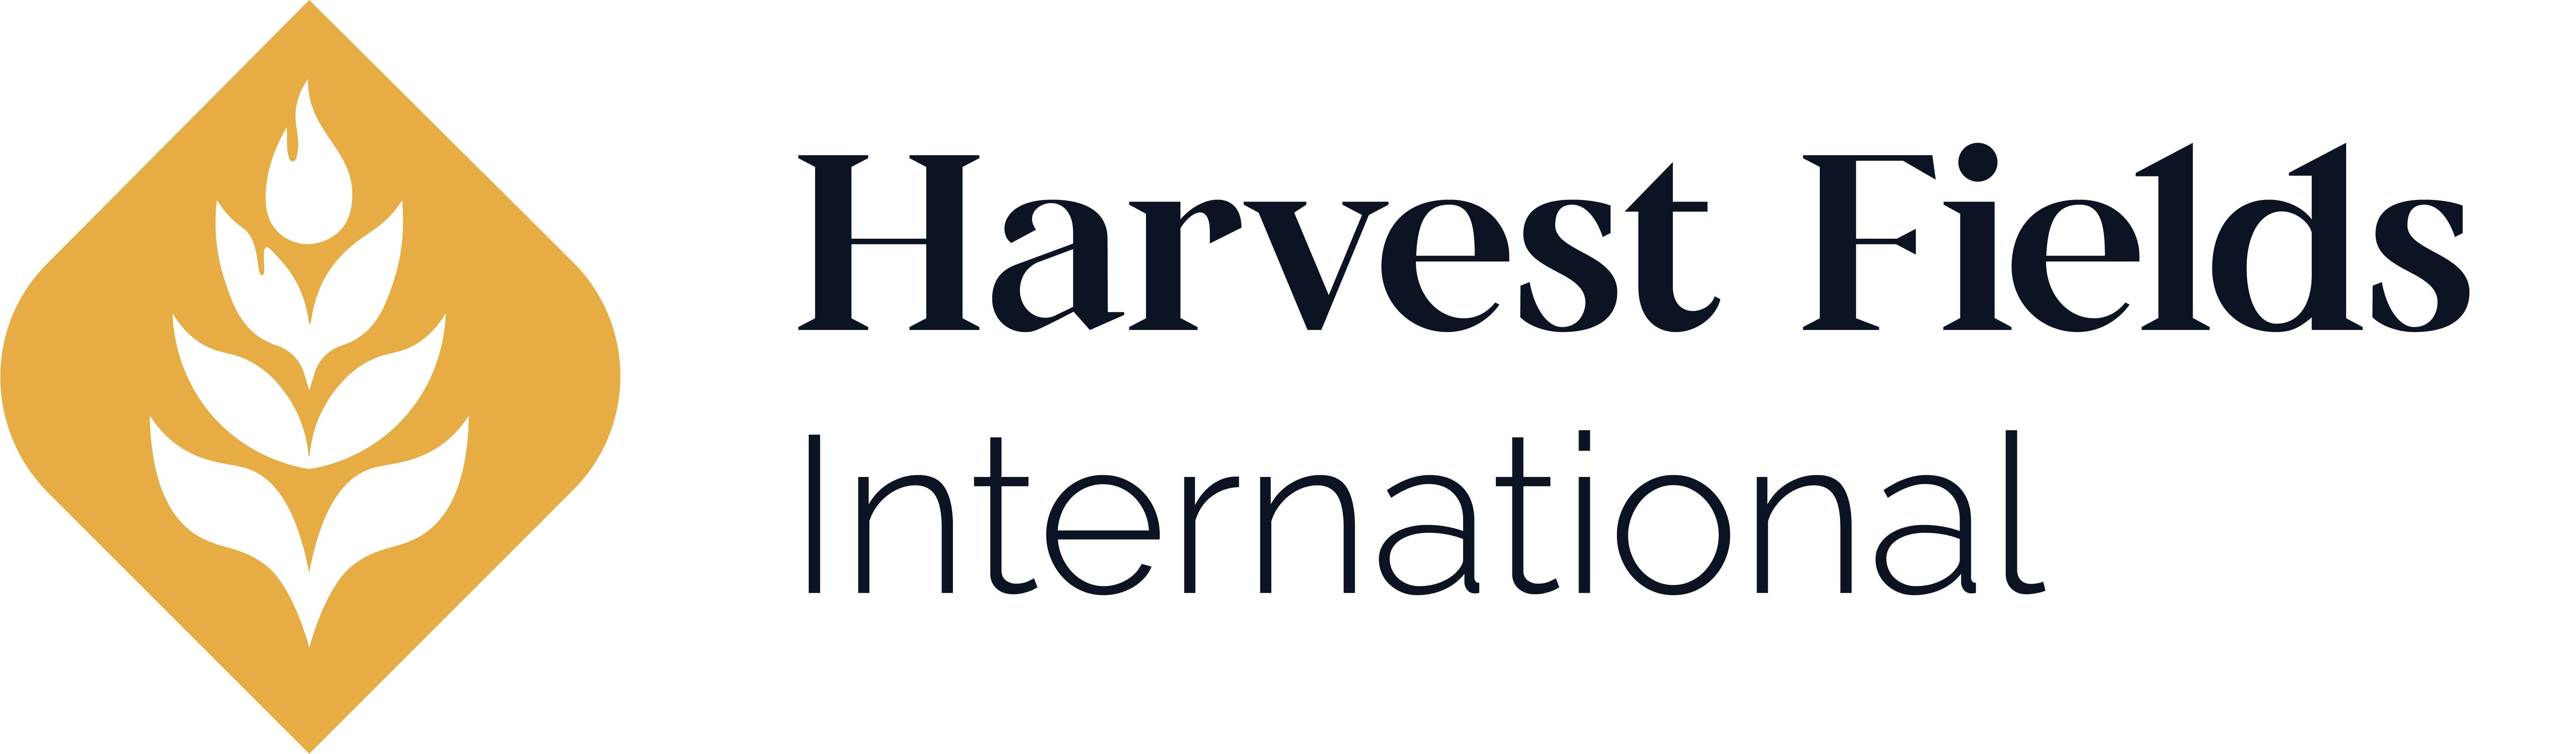 Harvest Fields International